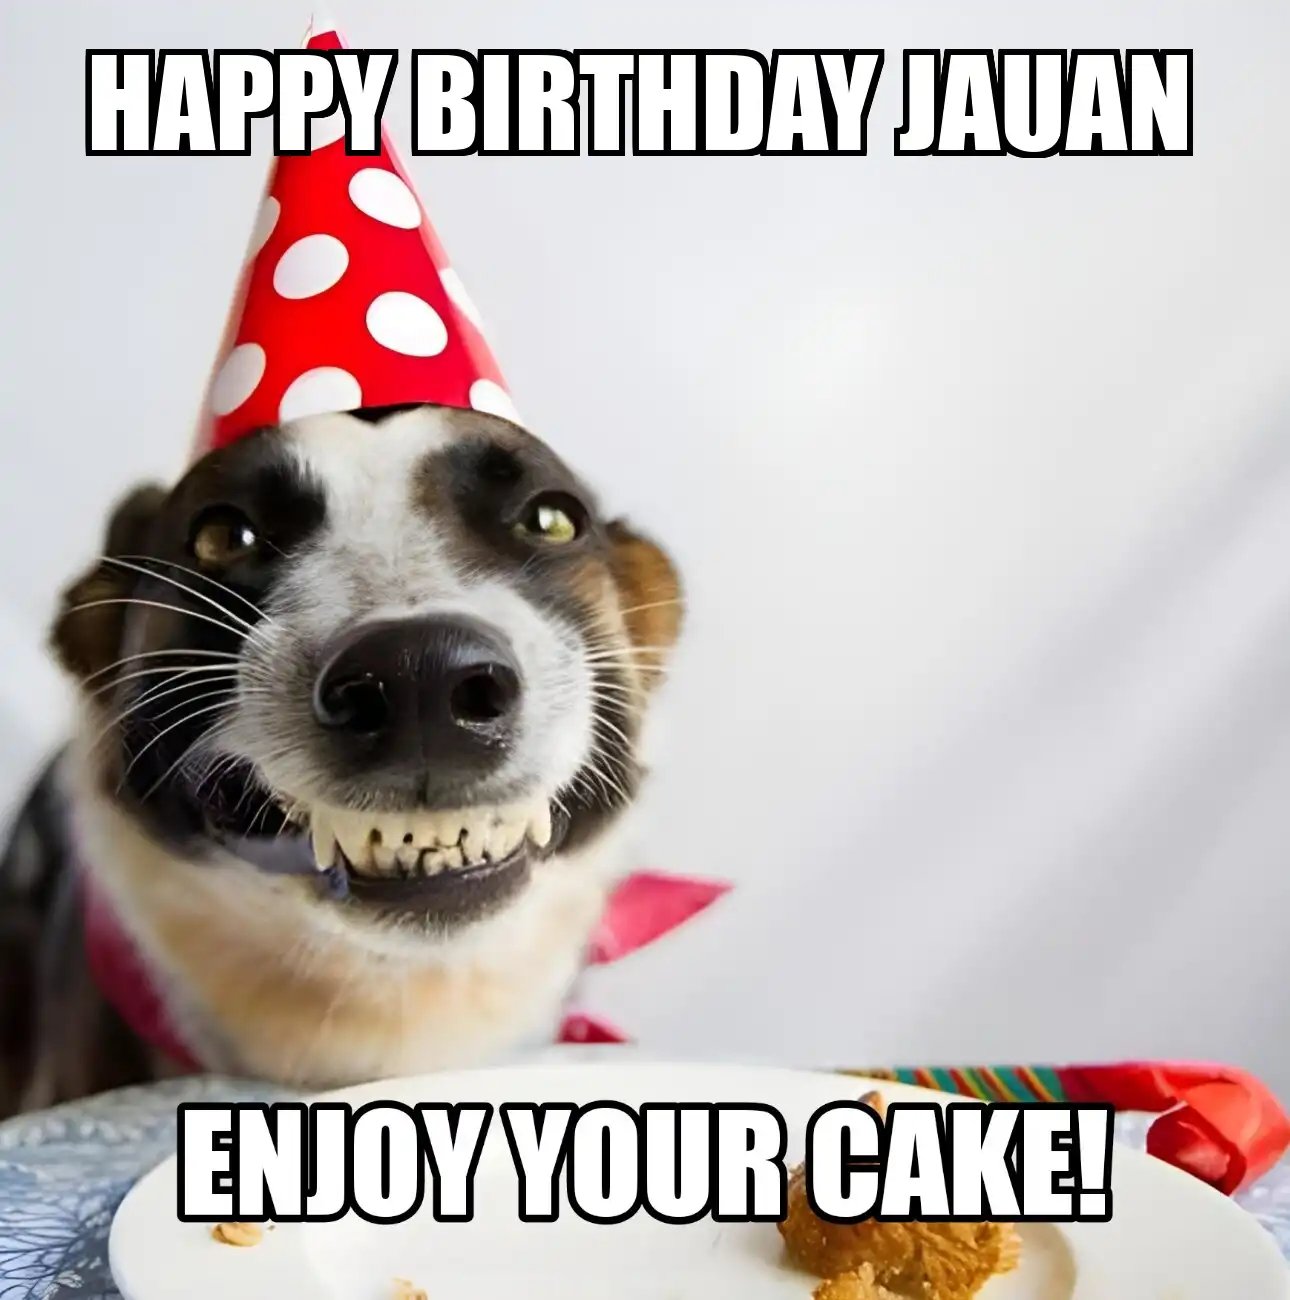 Happy Birthday Jauan Enjoy Your Cake Dog Meme